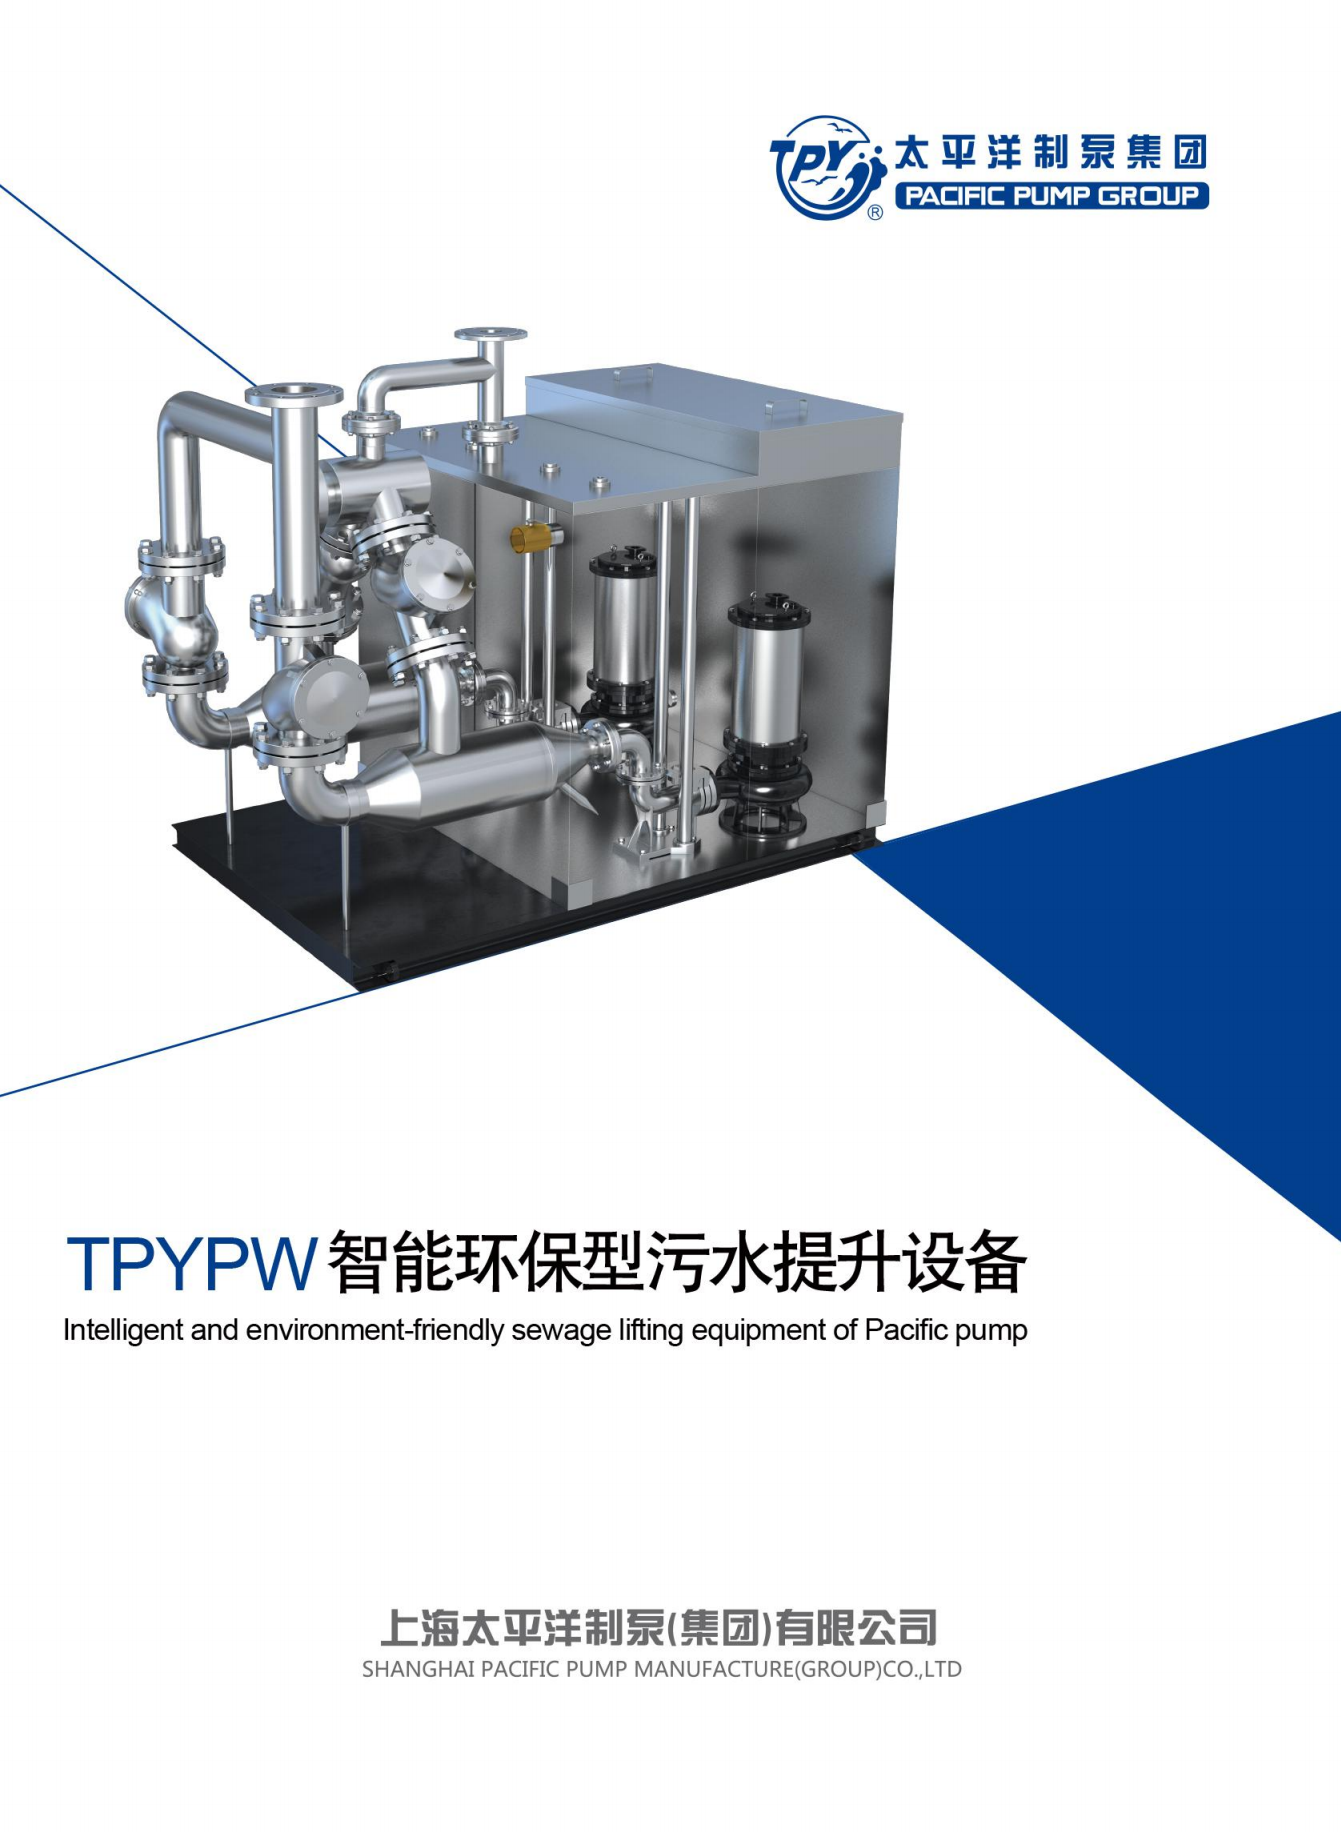 TPYPW智能环保型污水提升设备